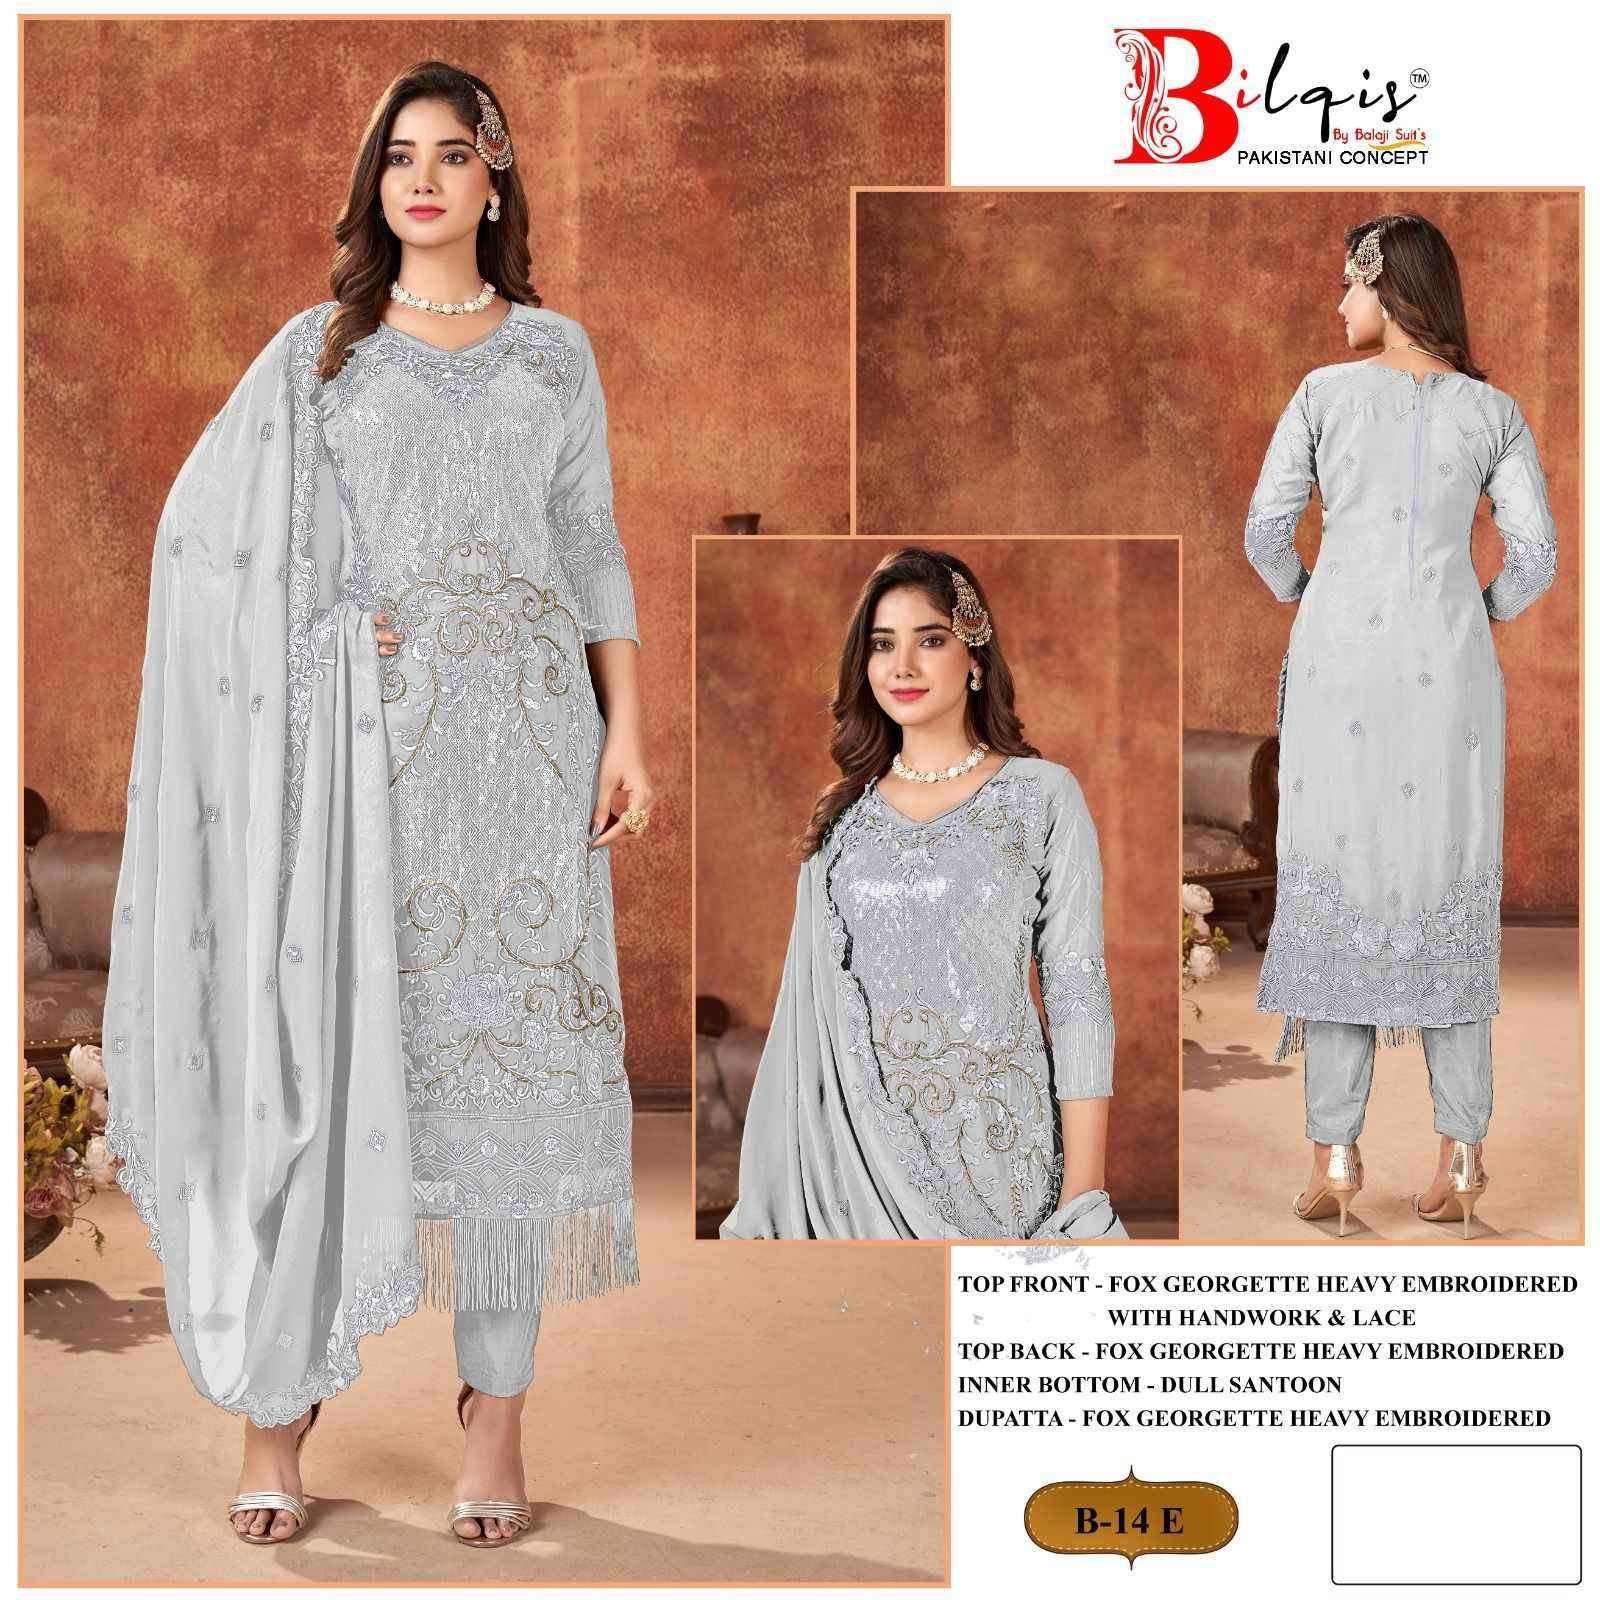 Bilqis B 14 Colors Heavy Designer Pakistani Dress New Collection